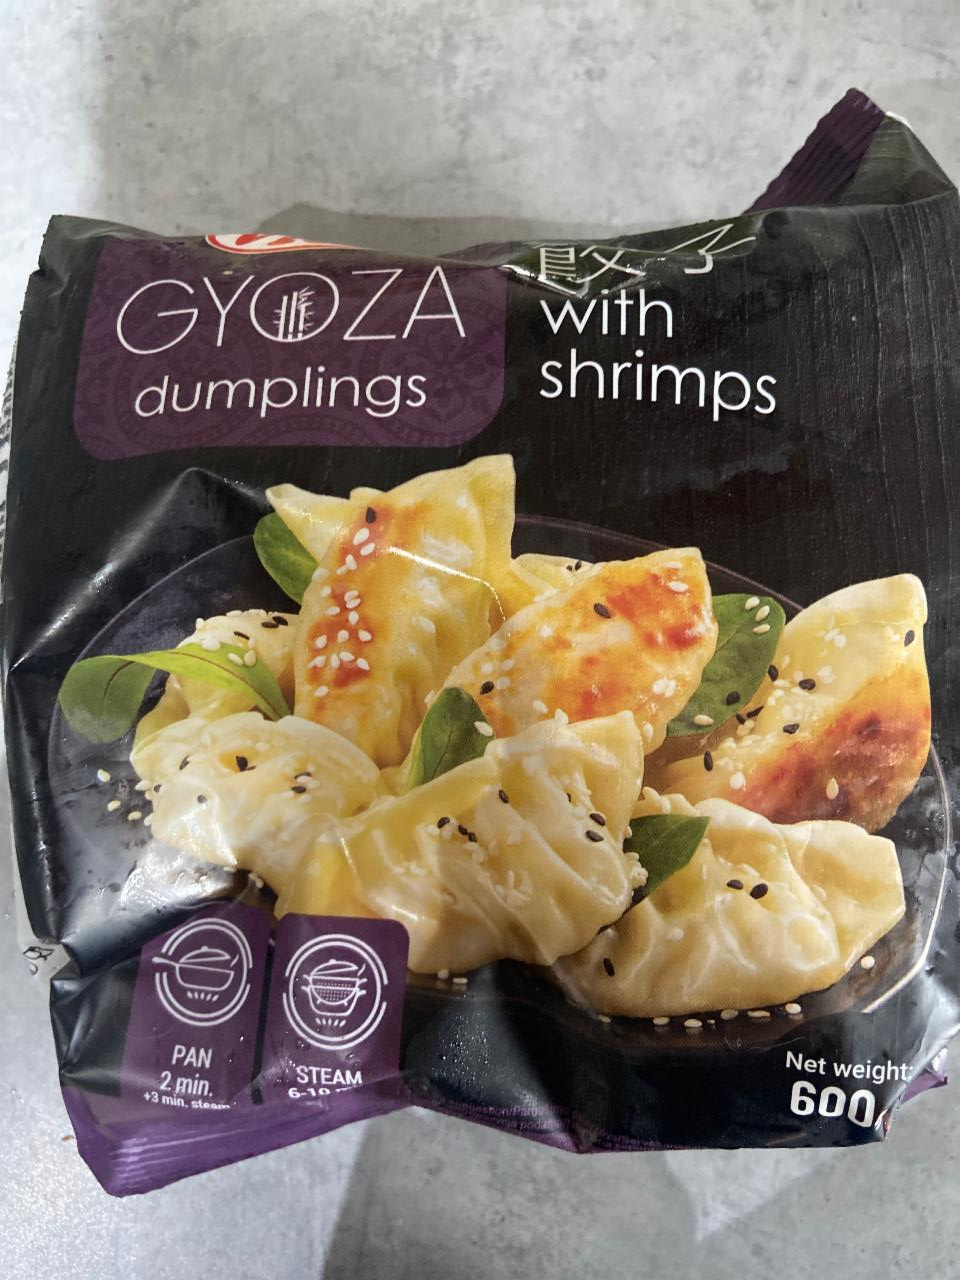 Fotografie - Gyoza dumplings with shrimps Vici